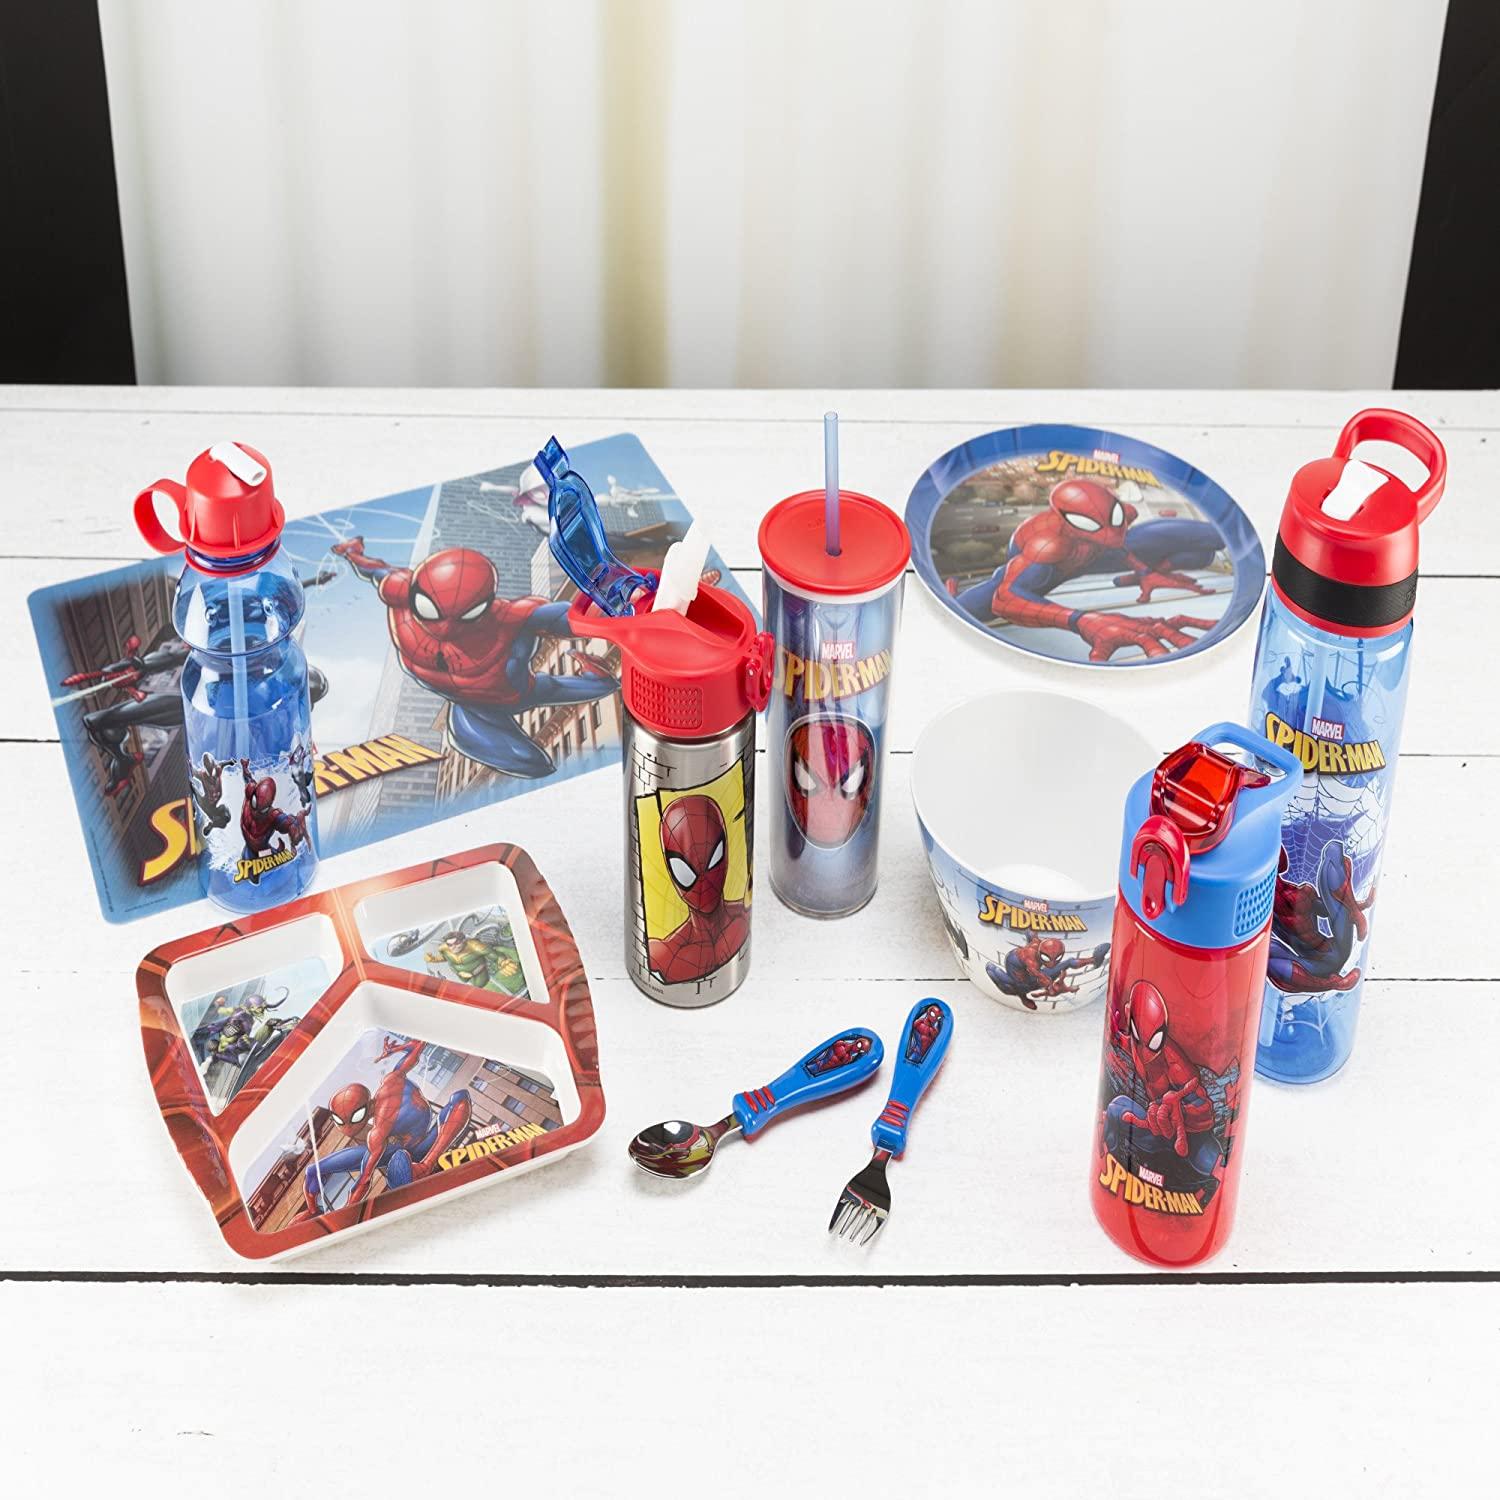 Zak Design Marvel Comics Spiderman Flip-top Travel Water Bottle Blue Kids  16 Oz for sale online